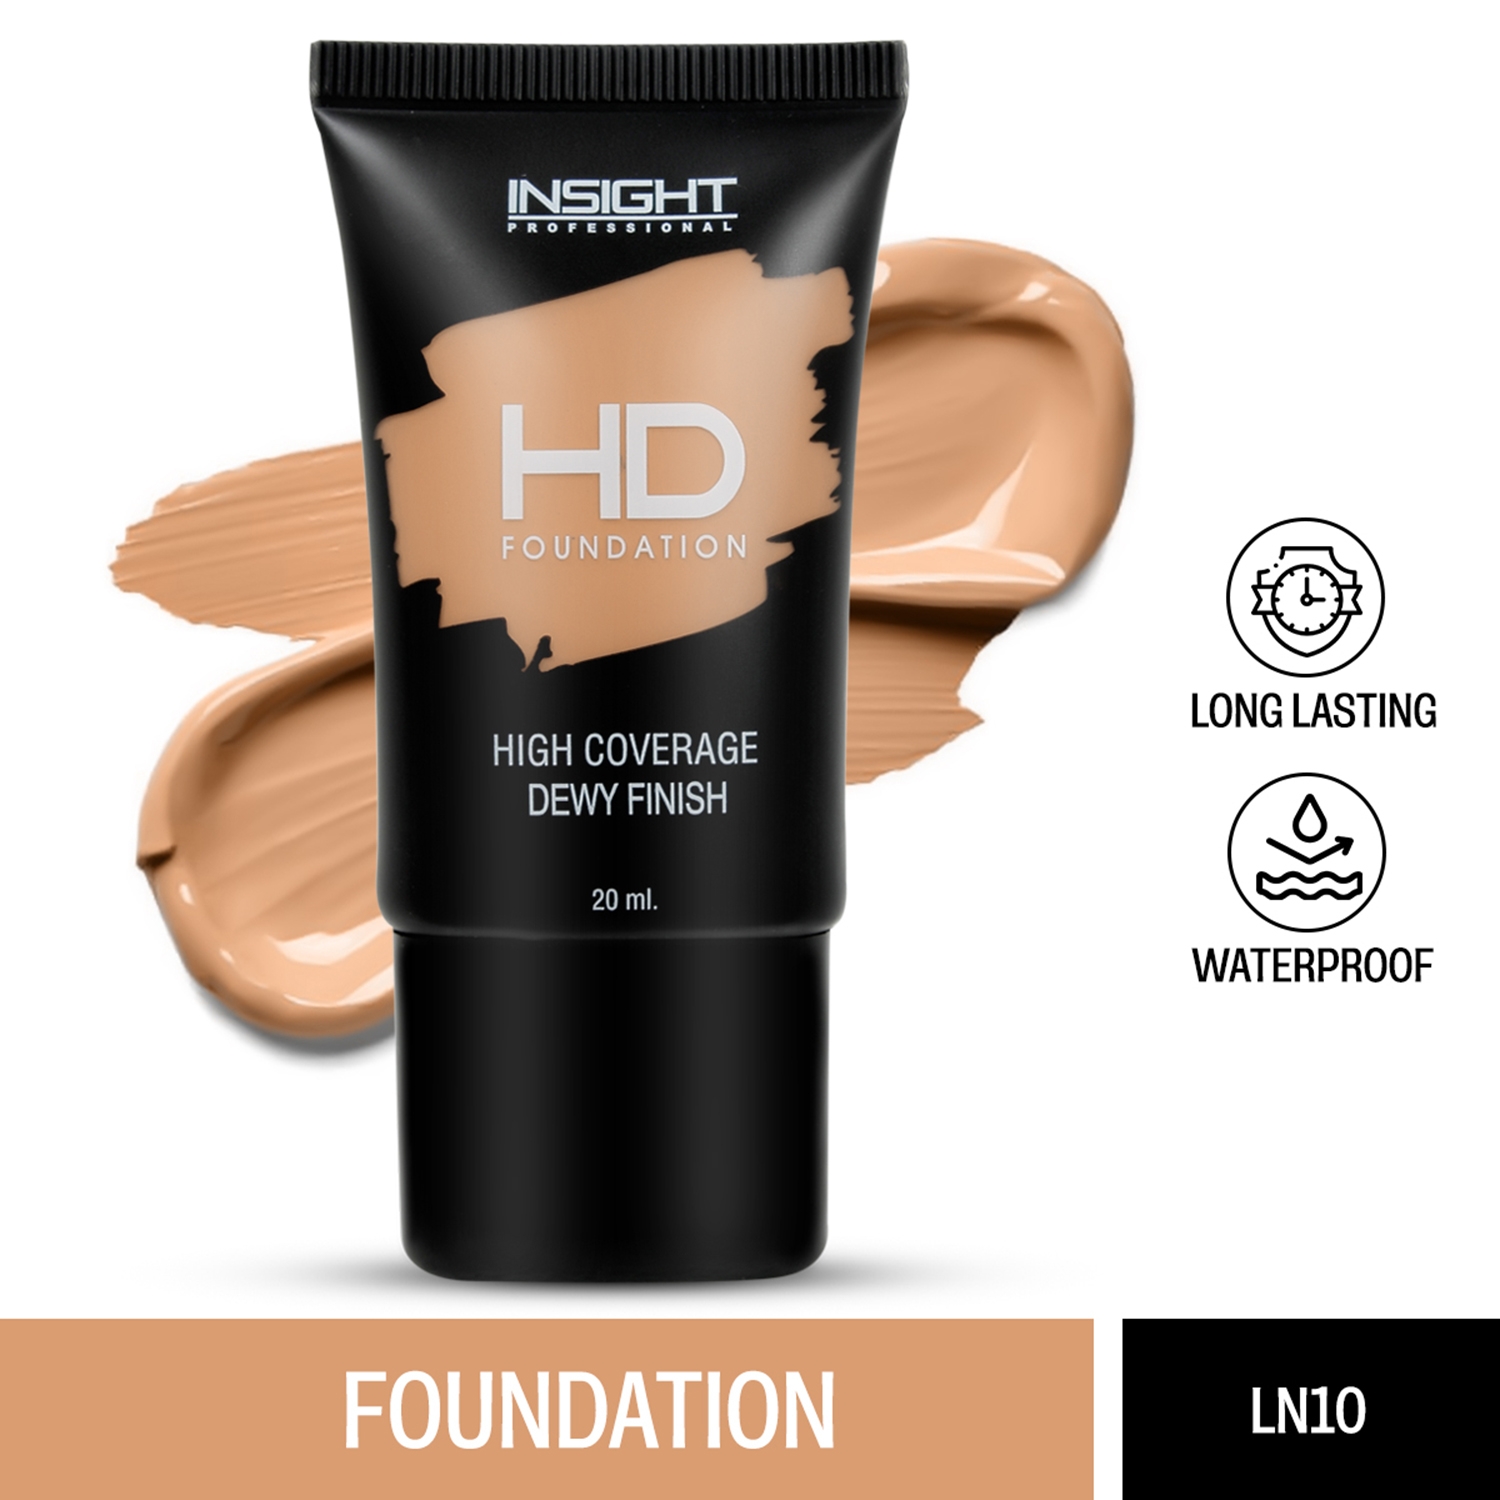 Insight Cosmetics | Insight Cosmetics Dewy Finish HD Foundation - LN 10 (20ml)